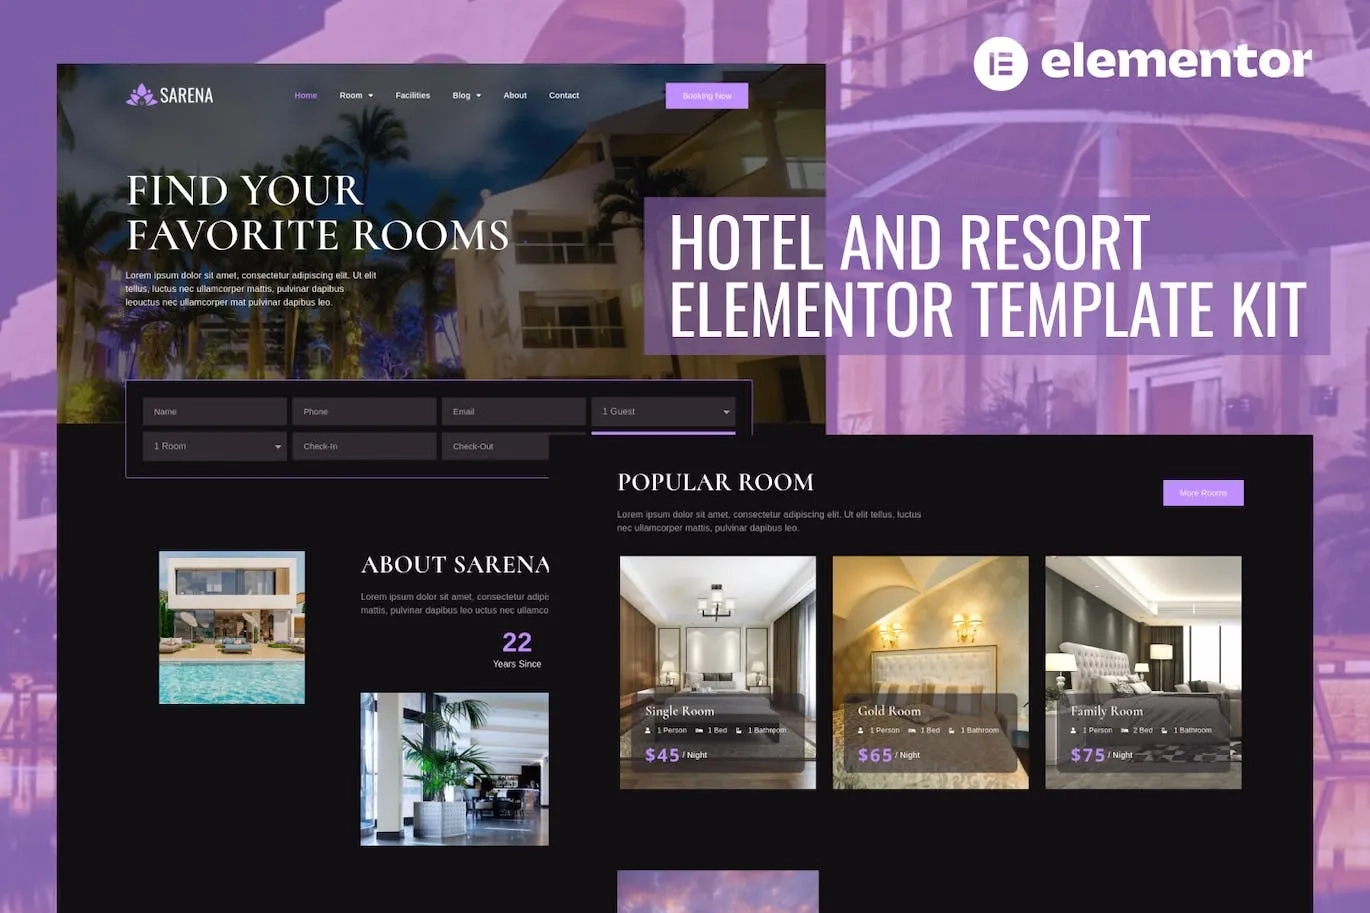 Sarena Hotel And Resort Elementor Template Kit 40 1697205783 1